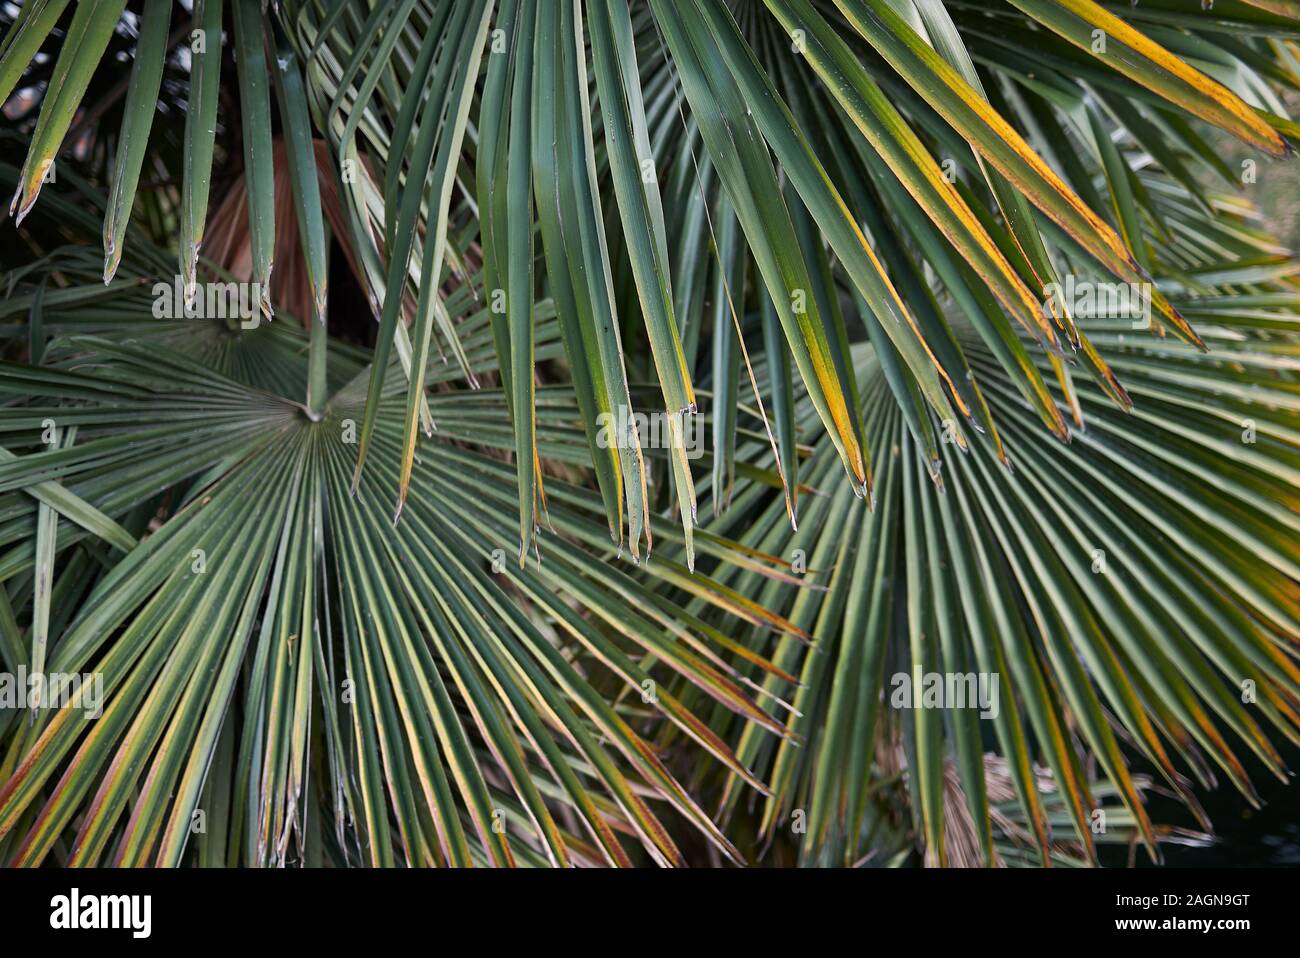 Trachycarpus fortunei palm close up with blue fruits Stock Photo